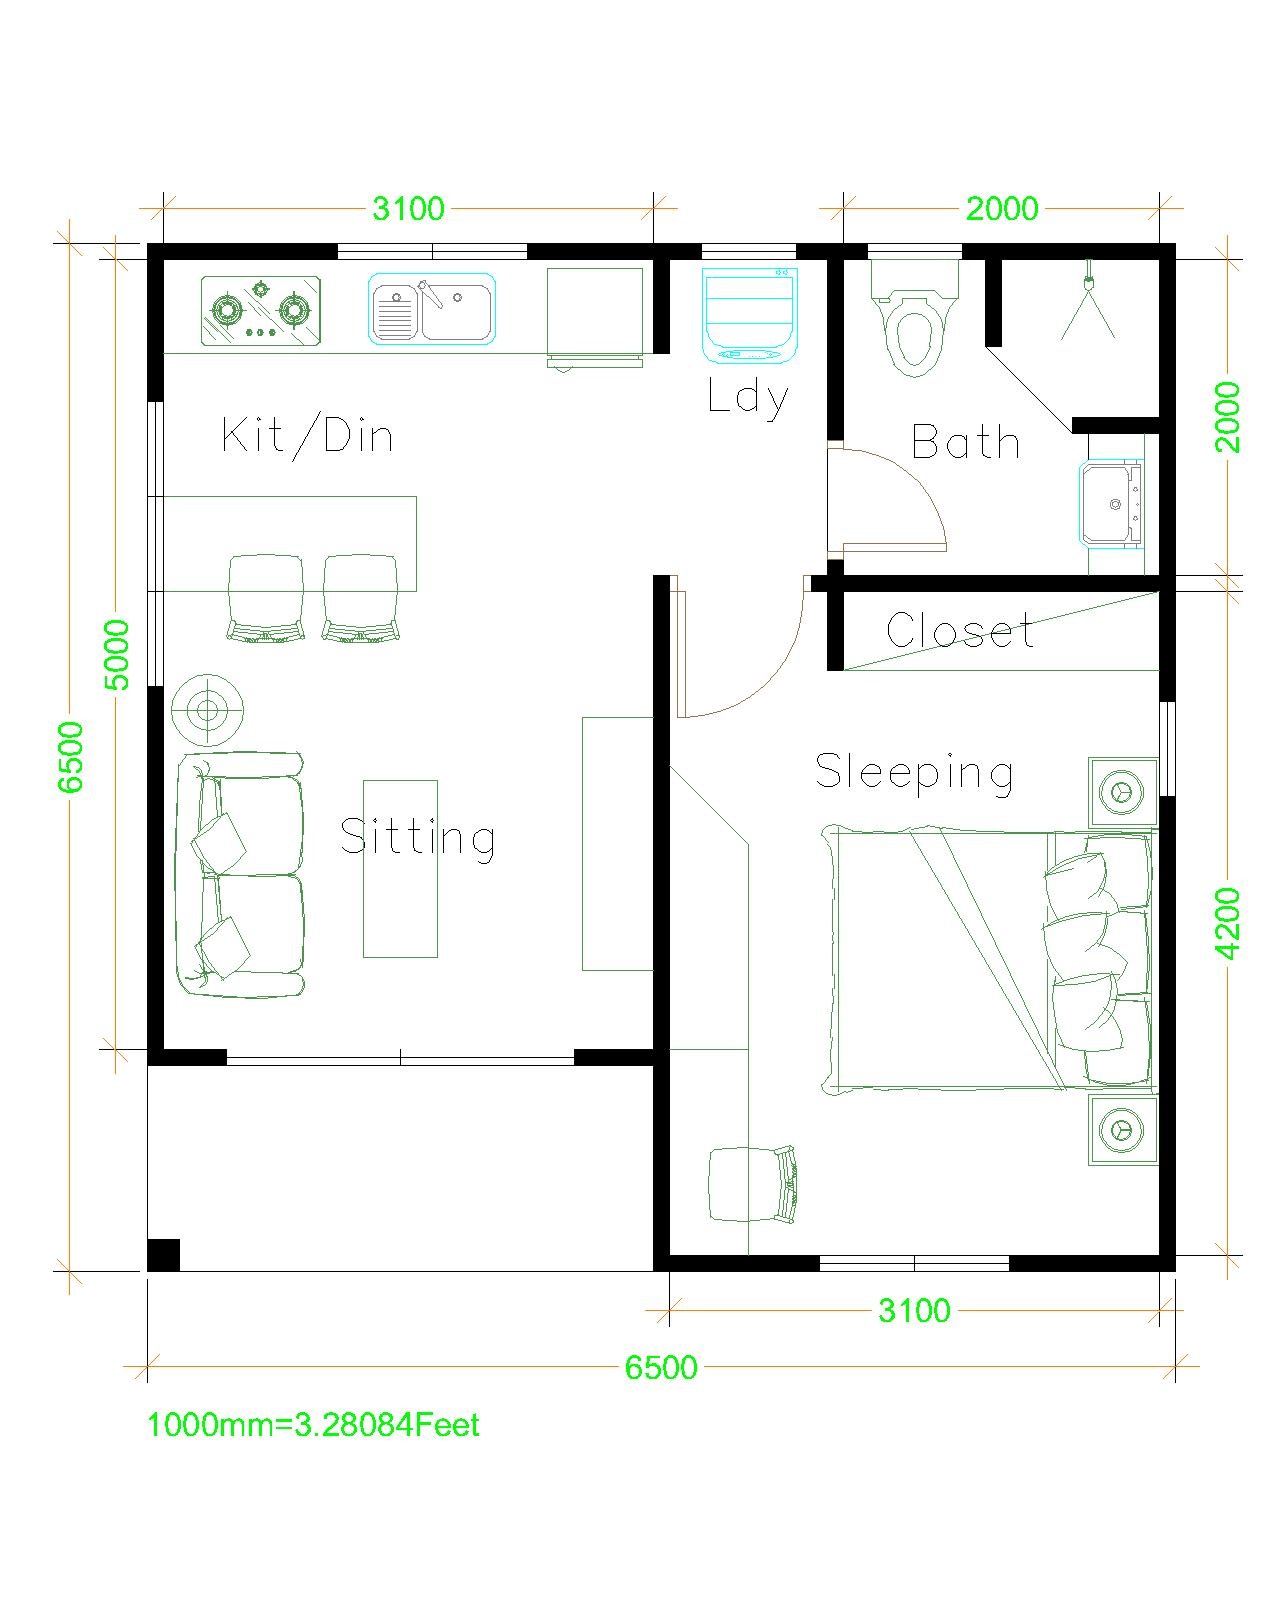 House Layout floor plan